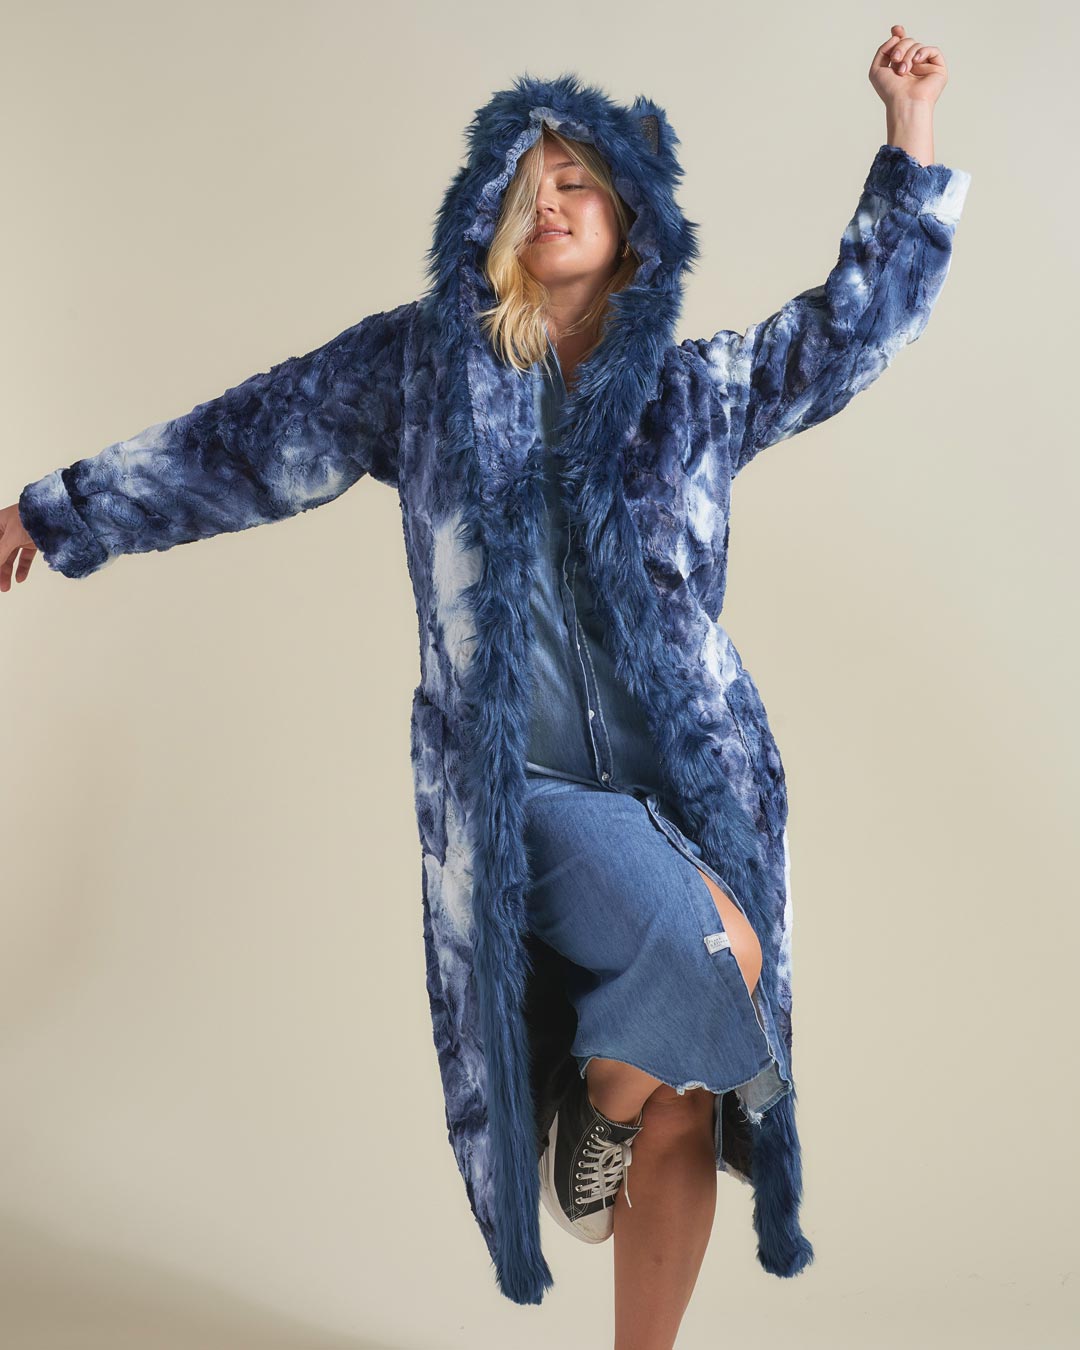 Hooded Water Wolf Robe Worn Over Denim Dress by Female Model